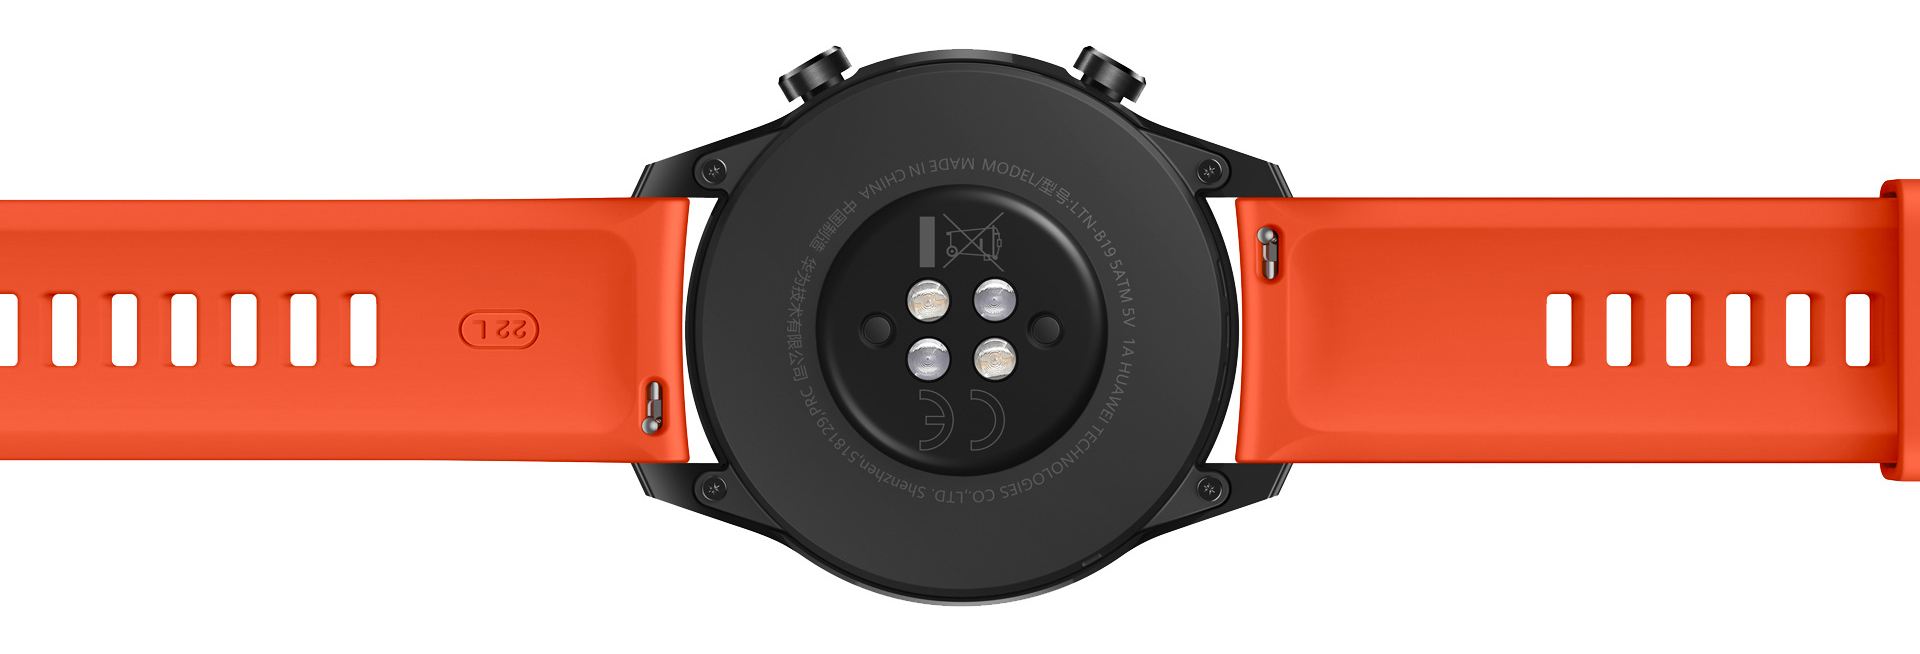 Traseira do Huawei Watch GT2 mostra sensores e pinos de carregamento.